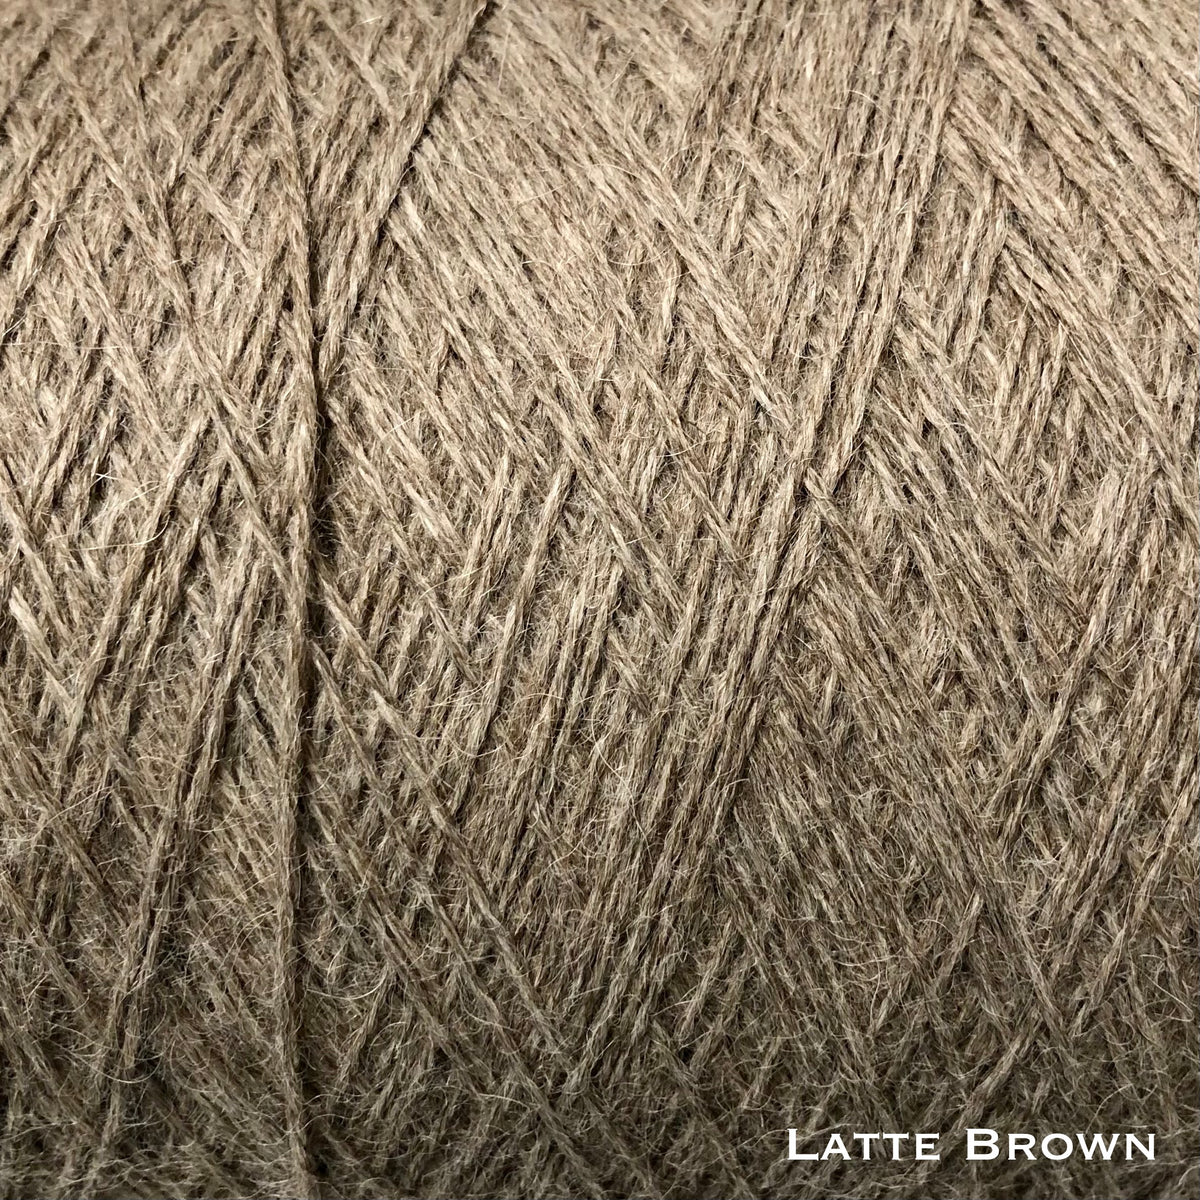 medium brown wool yarn for knitting